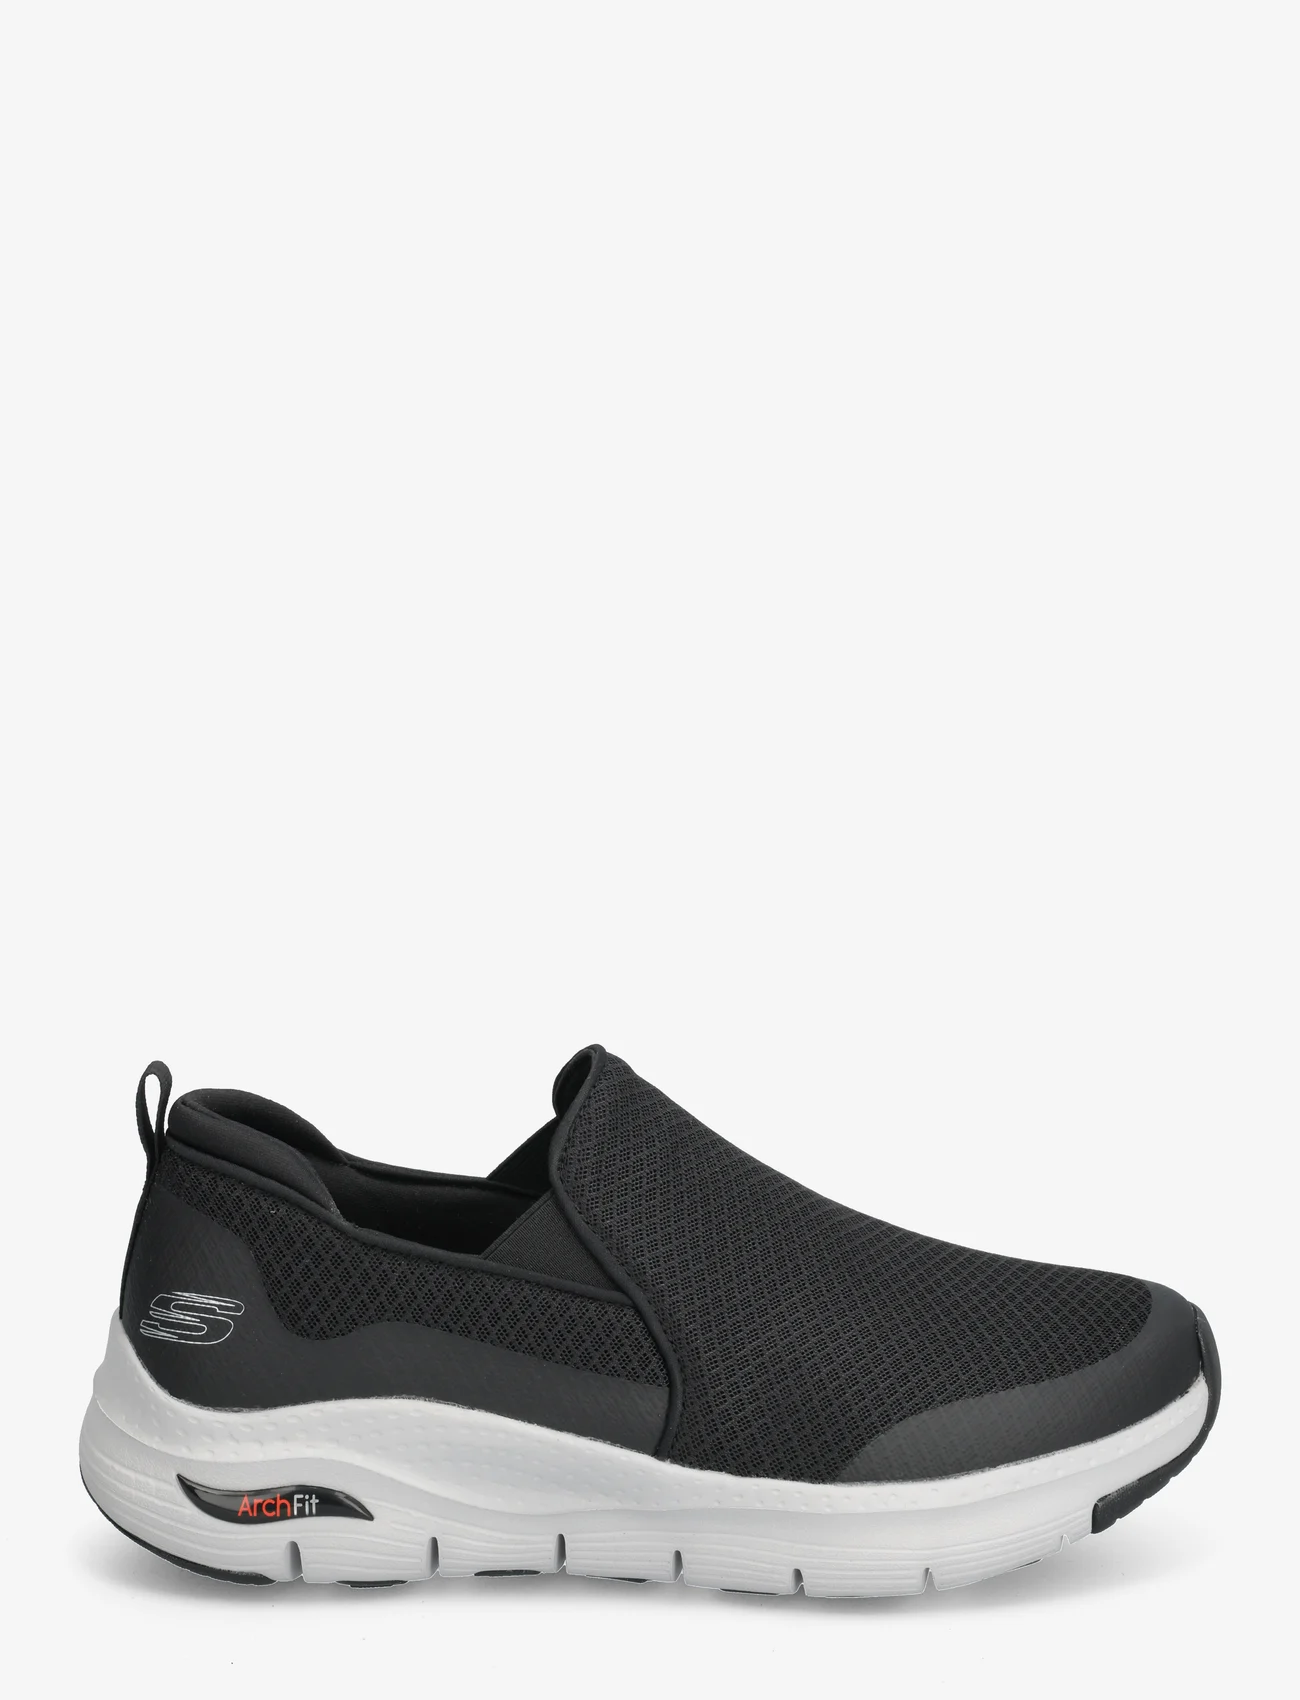 Skechers - Mens Arch Fit - Banlin - slip-on sneakers - bkw black white - 1